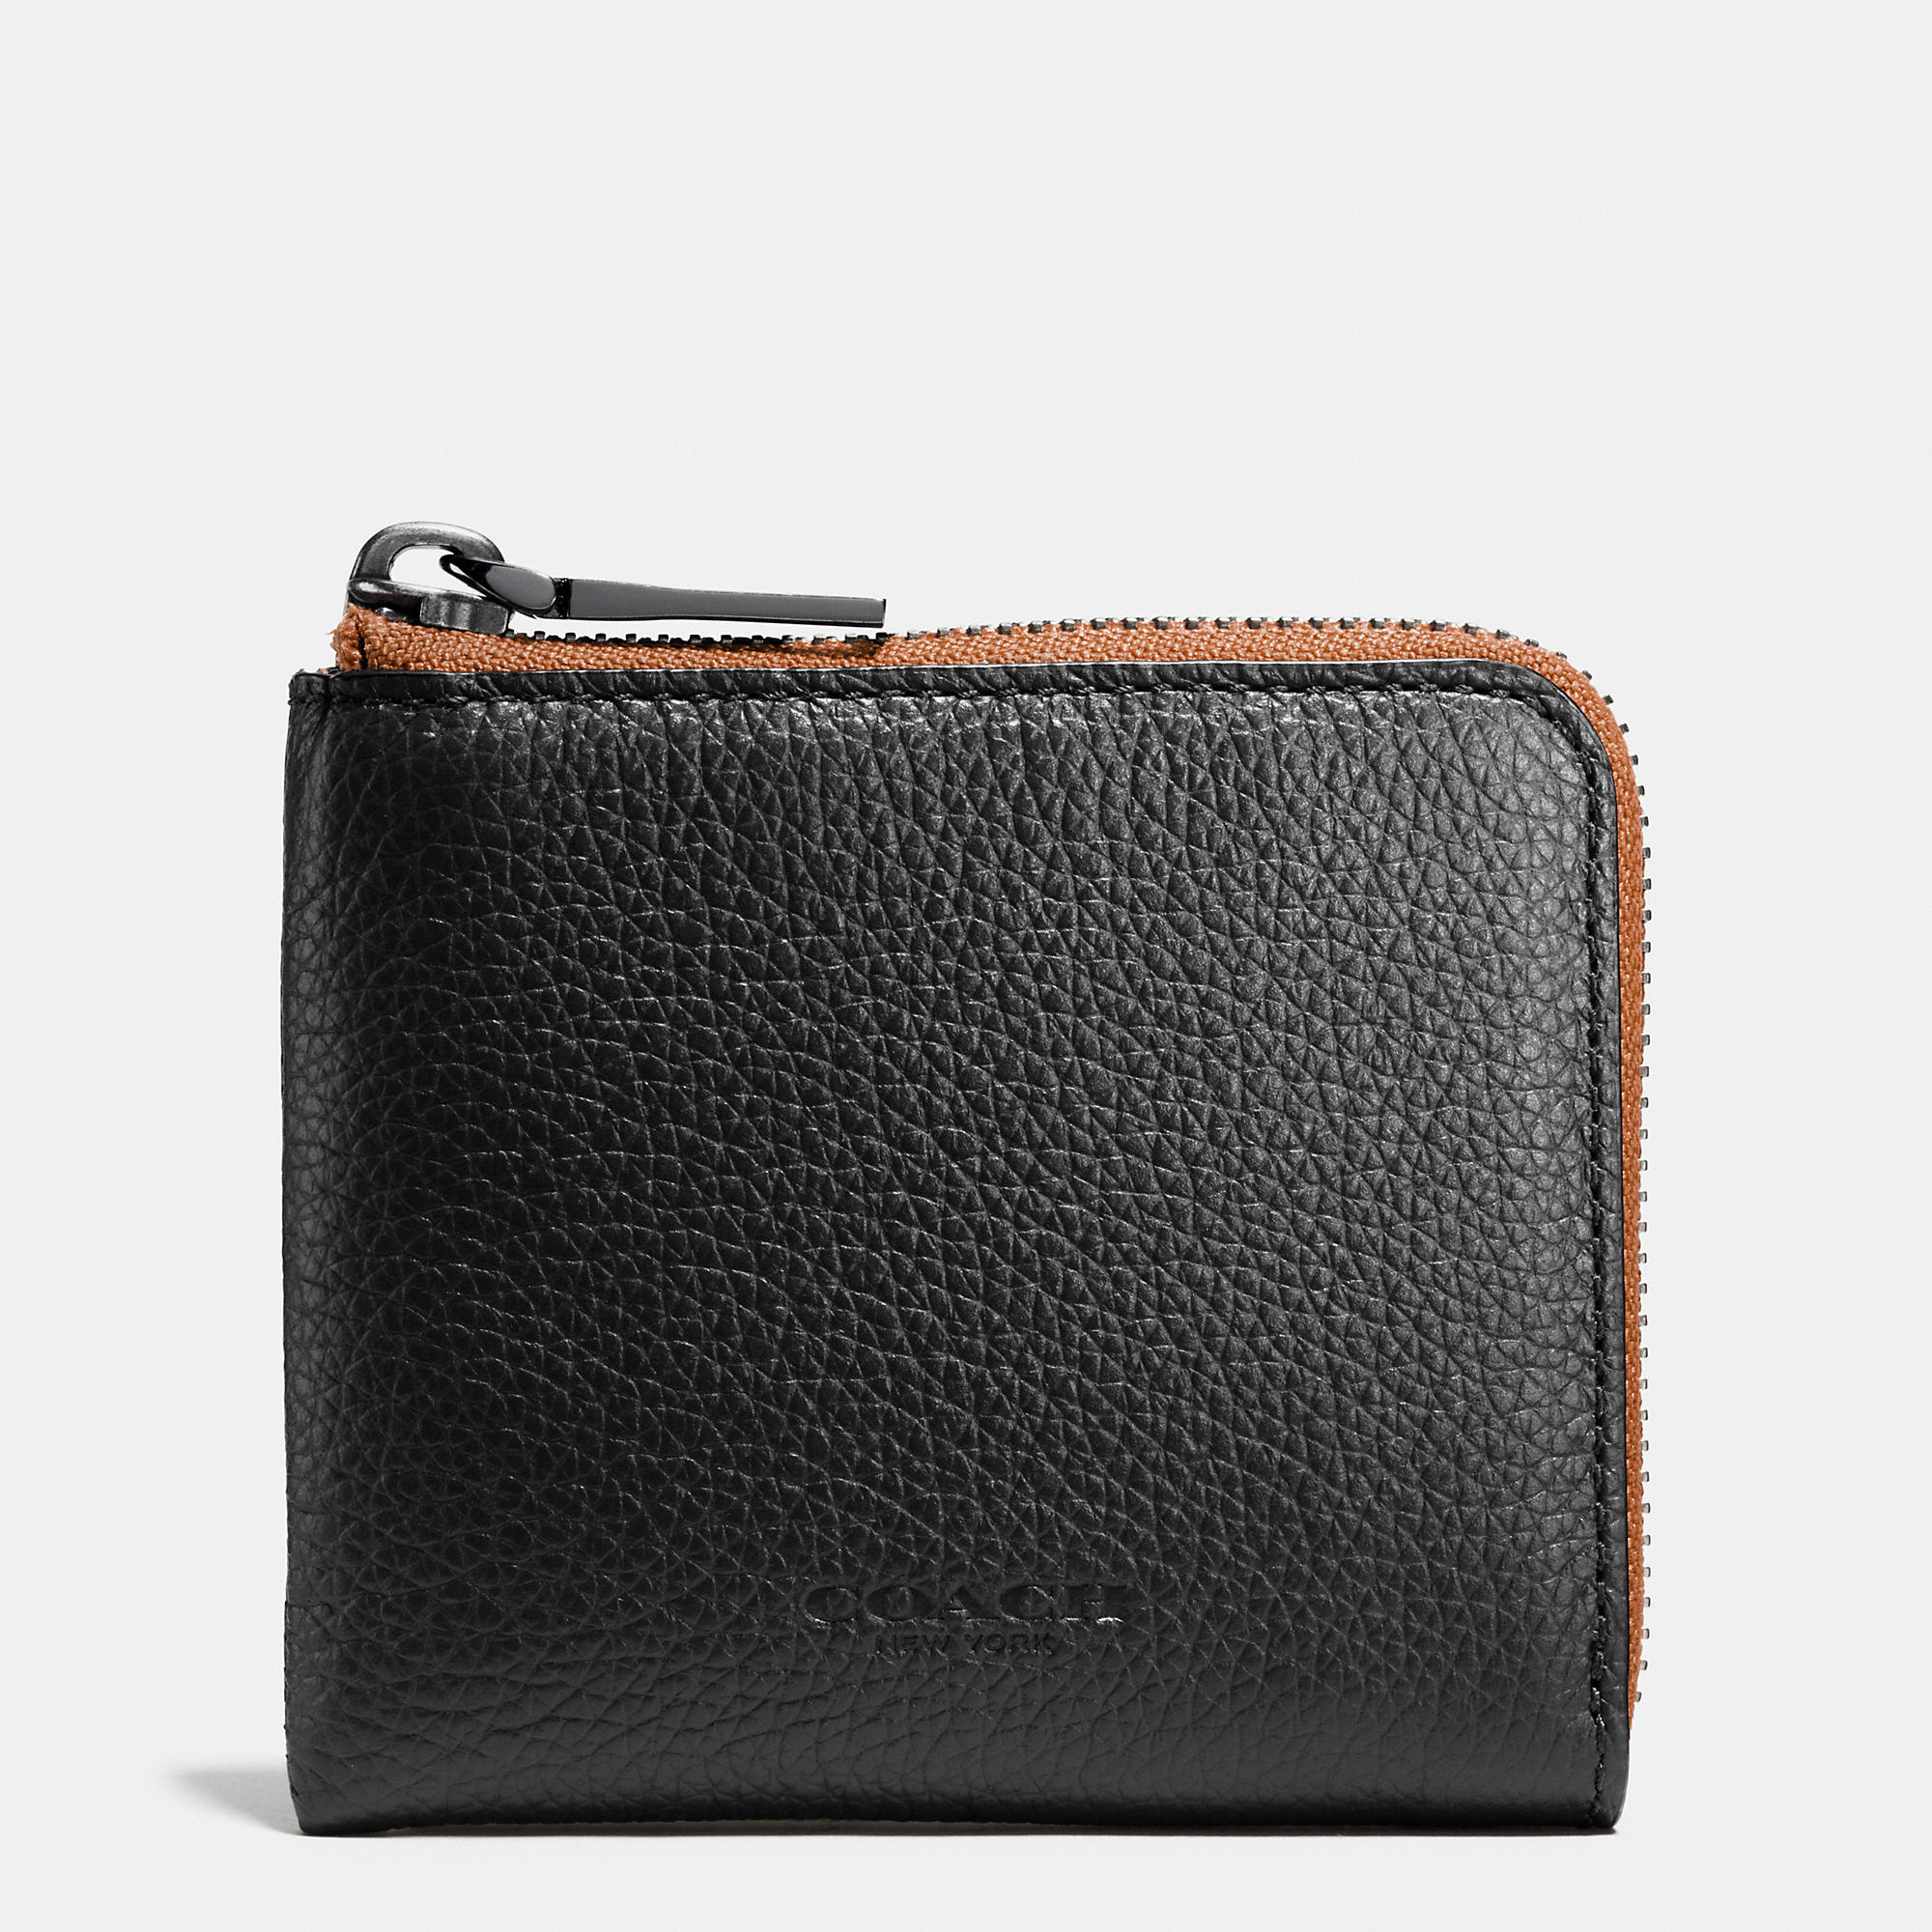 Lyst - Coach Half Zip Wallet In Pebble Leather in Black for Men